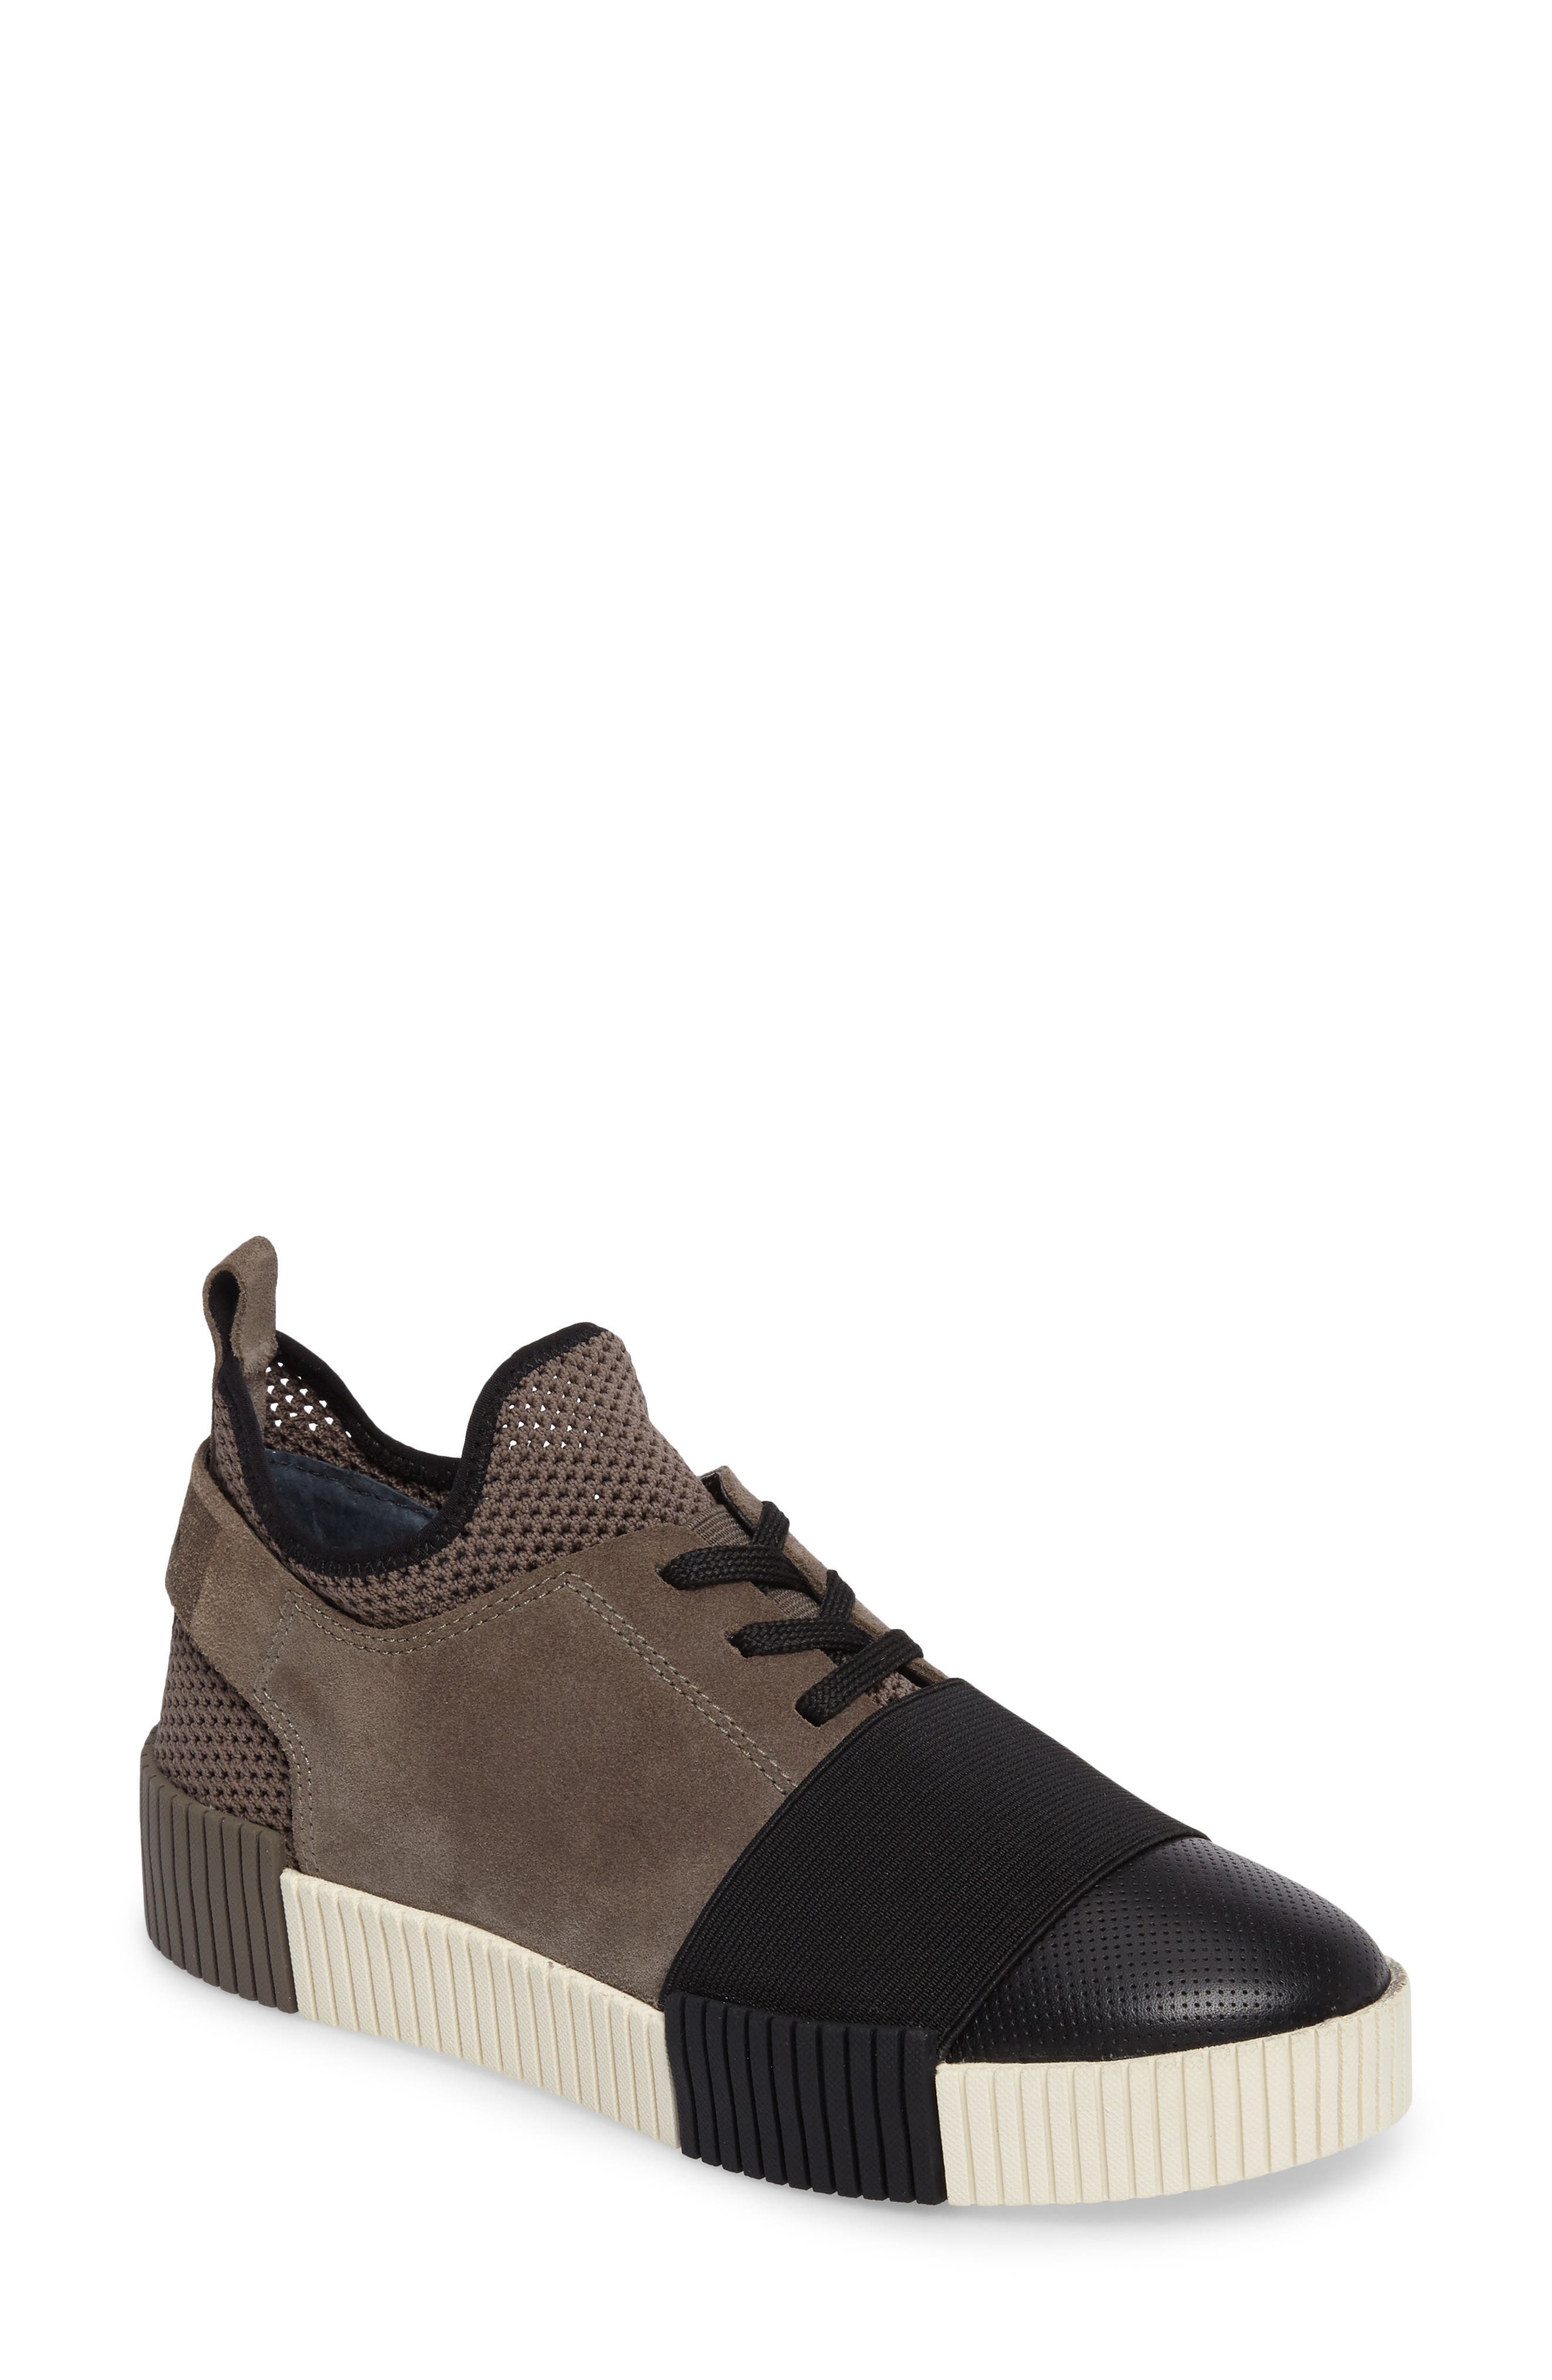 marc fisher ltd leather platform sneakers